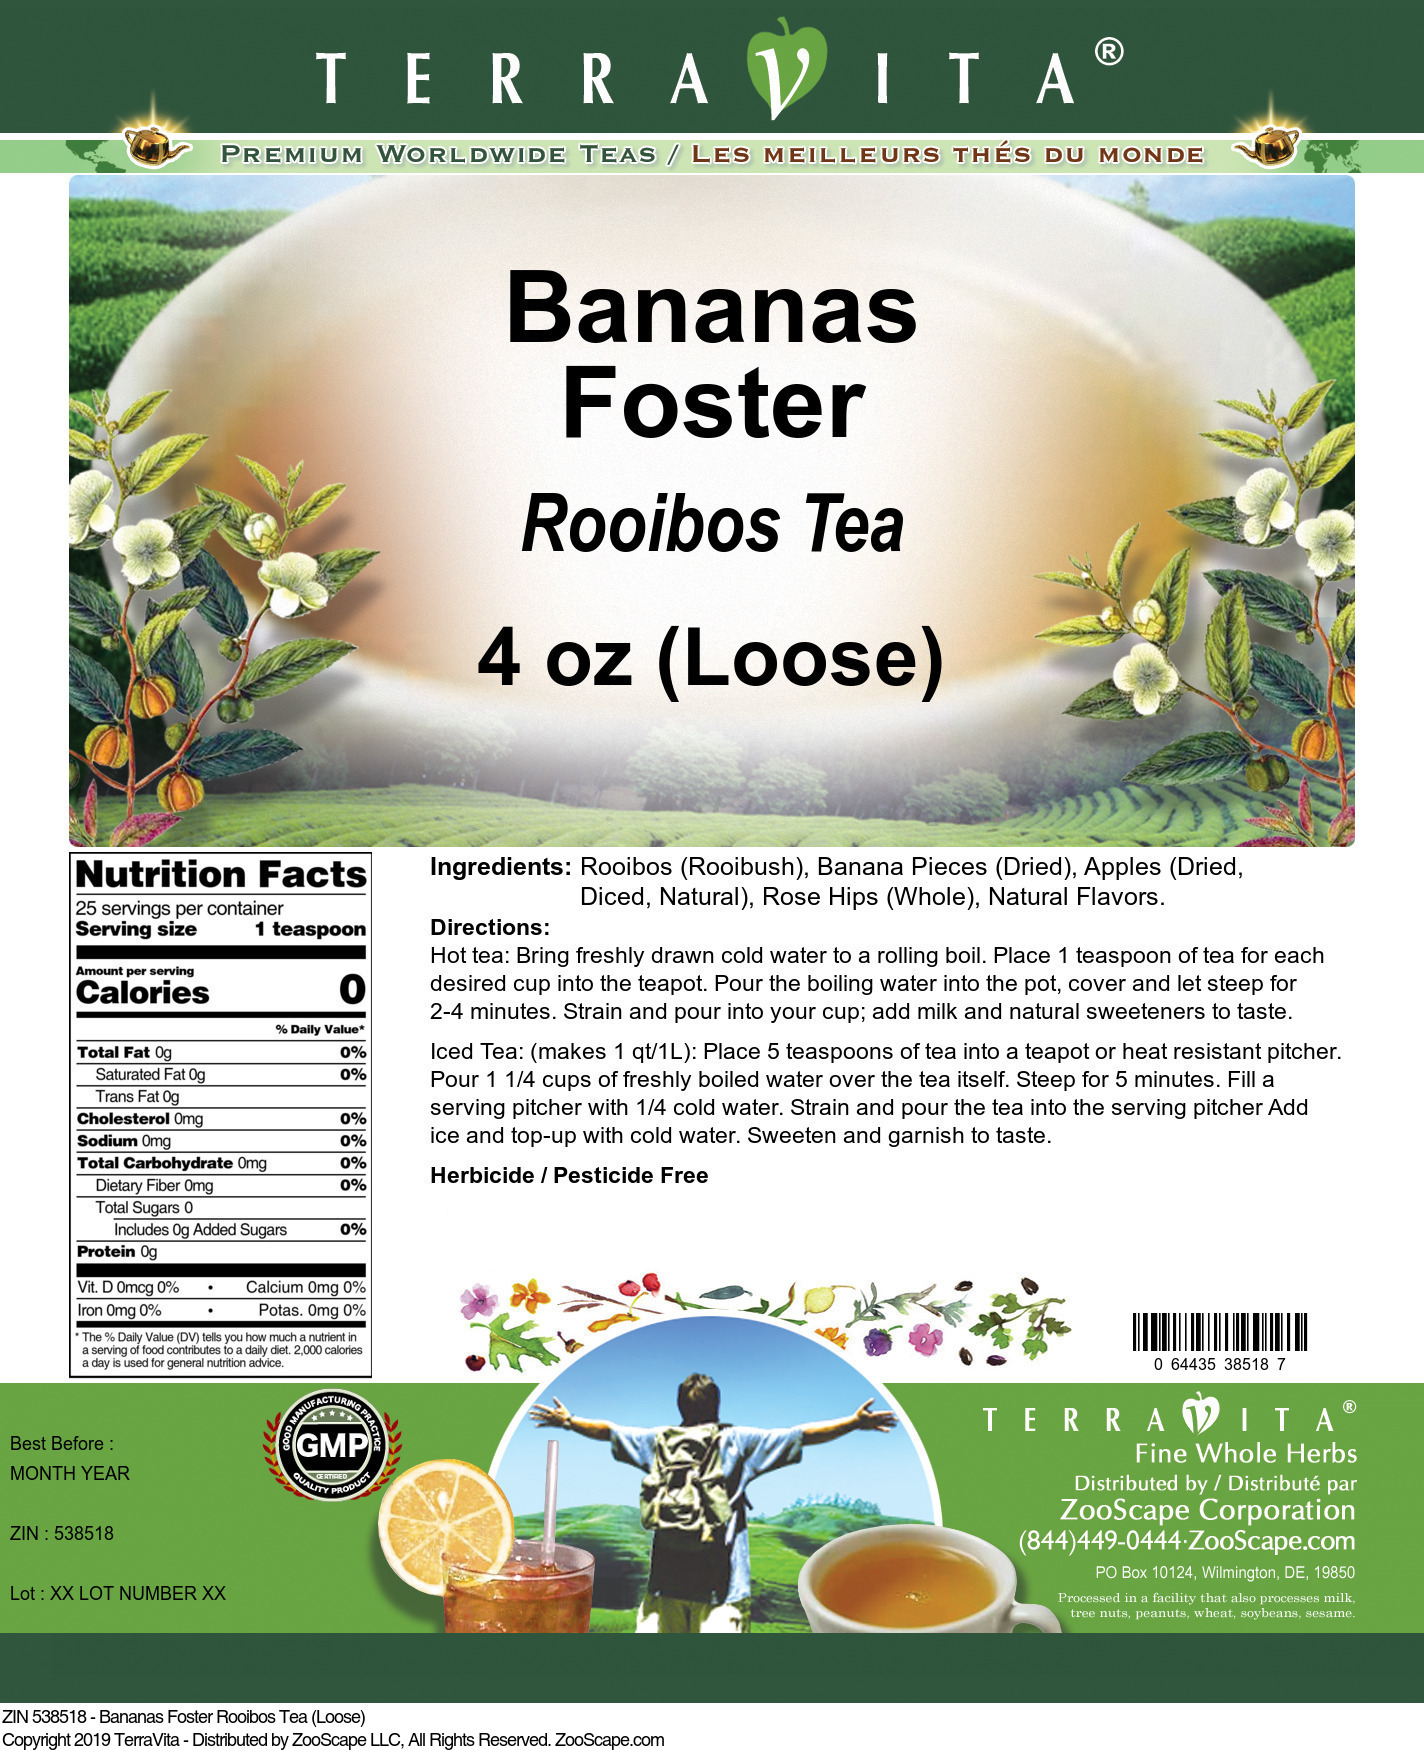 Bananas Foster Rooibos Tea (Loose) - Label